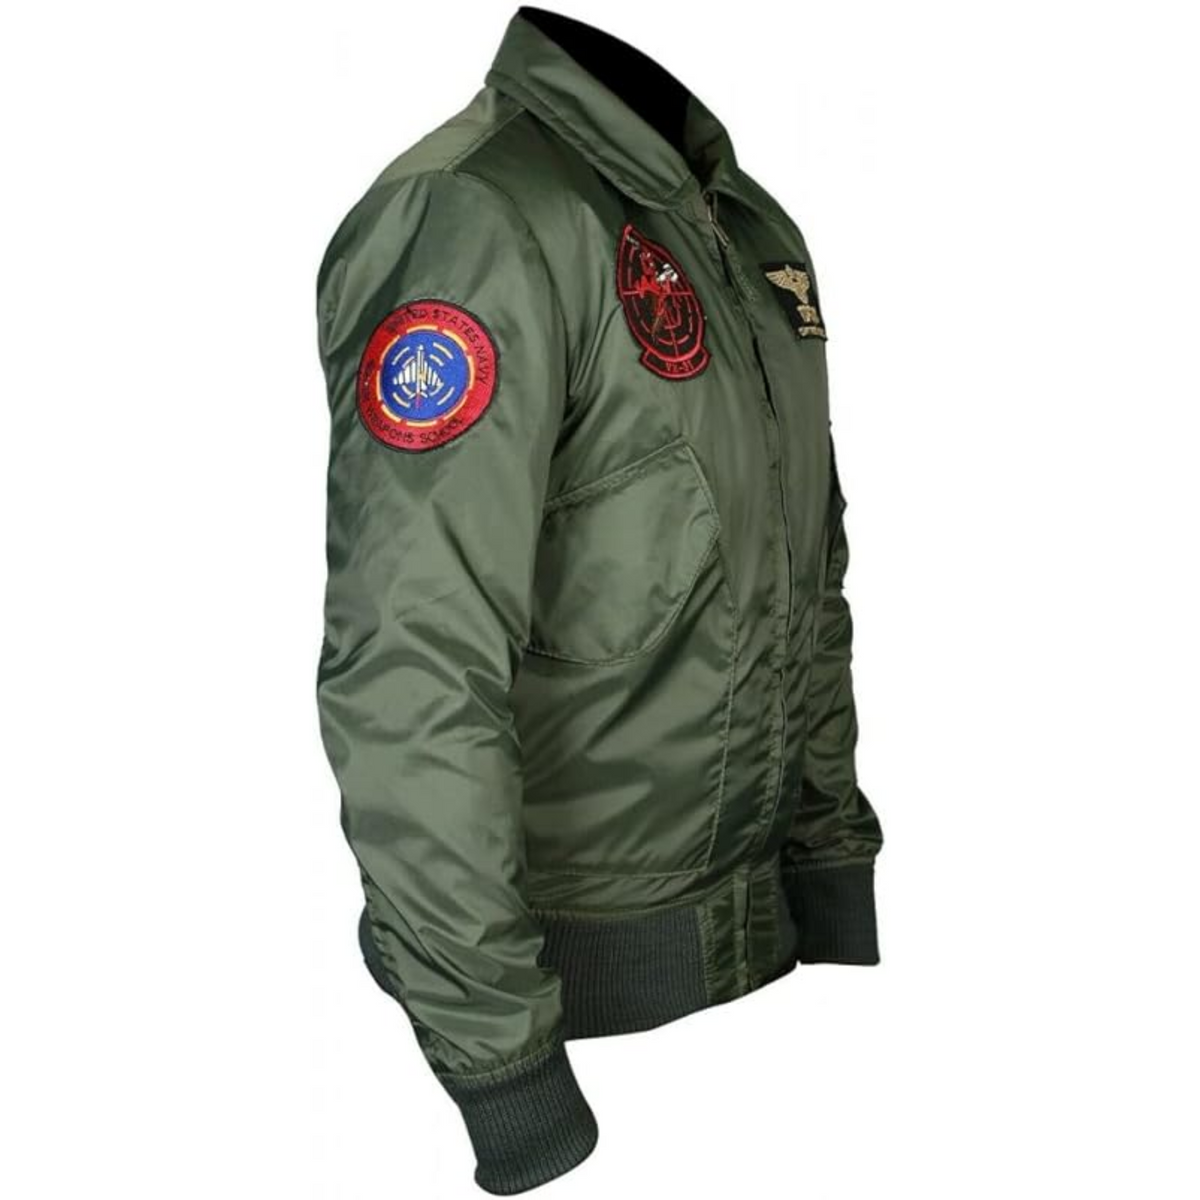 Top Gun Inspired Men's Bomber Jacket: Captain Pete Mitchell Flight Aviator Pilot Style